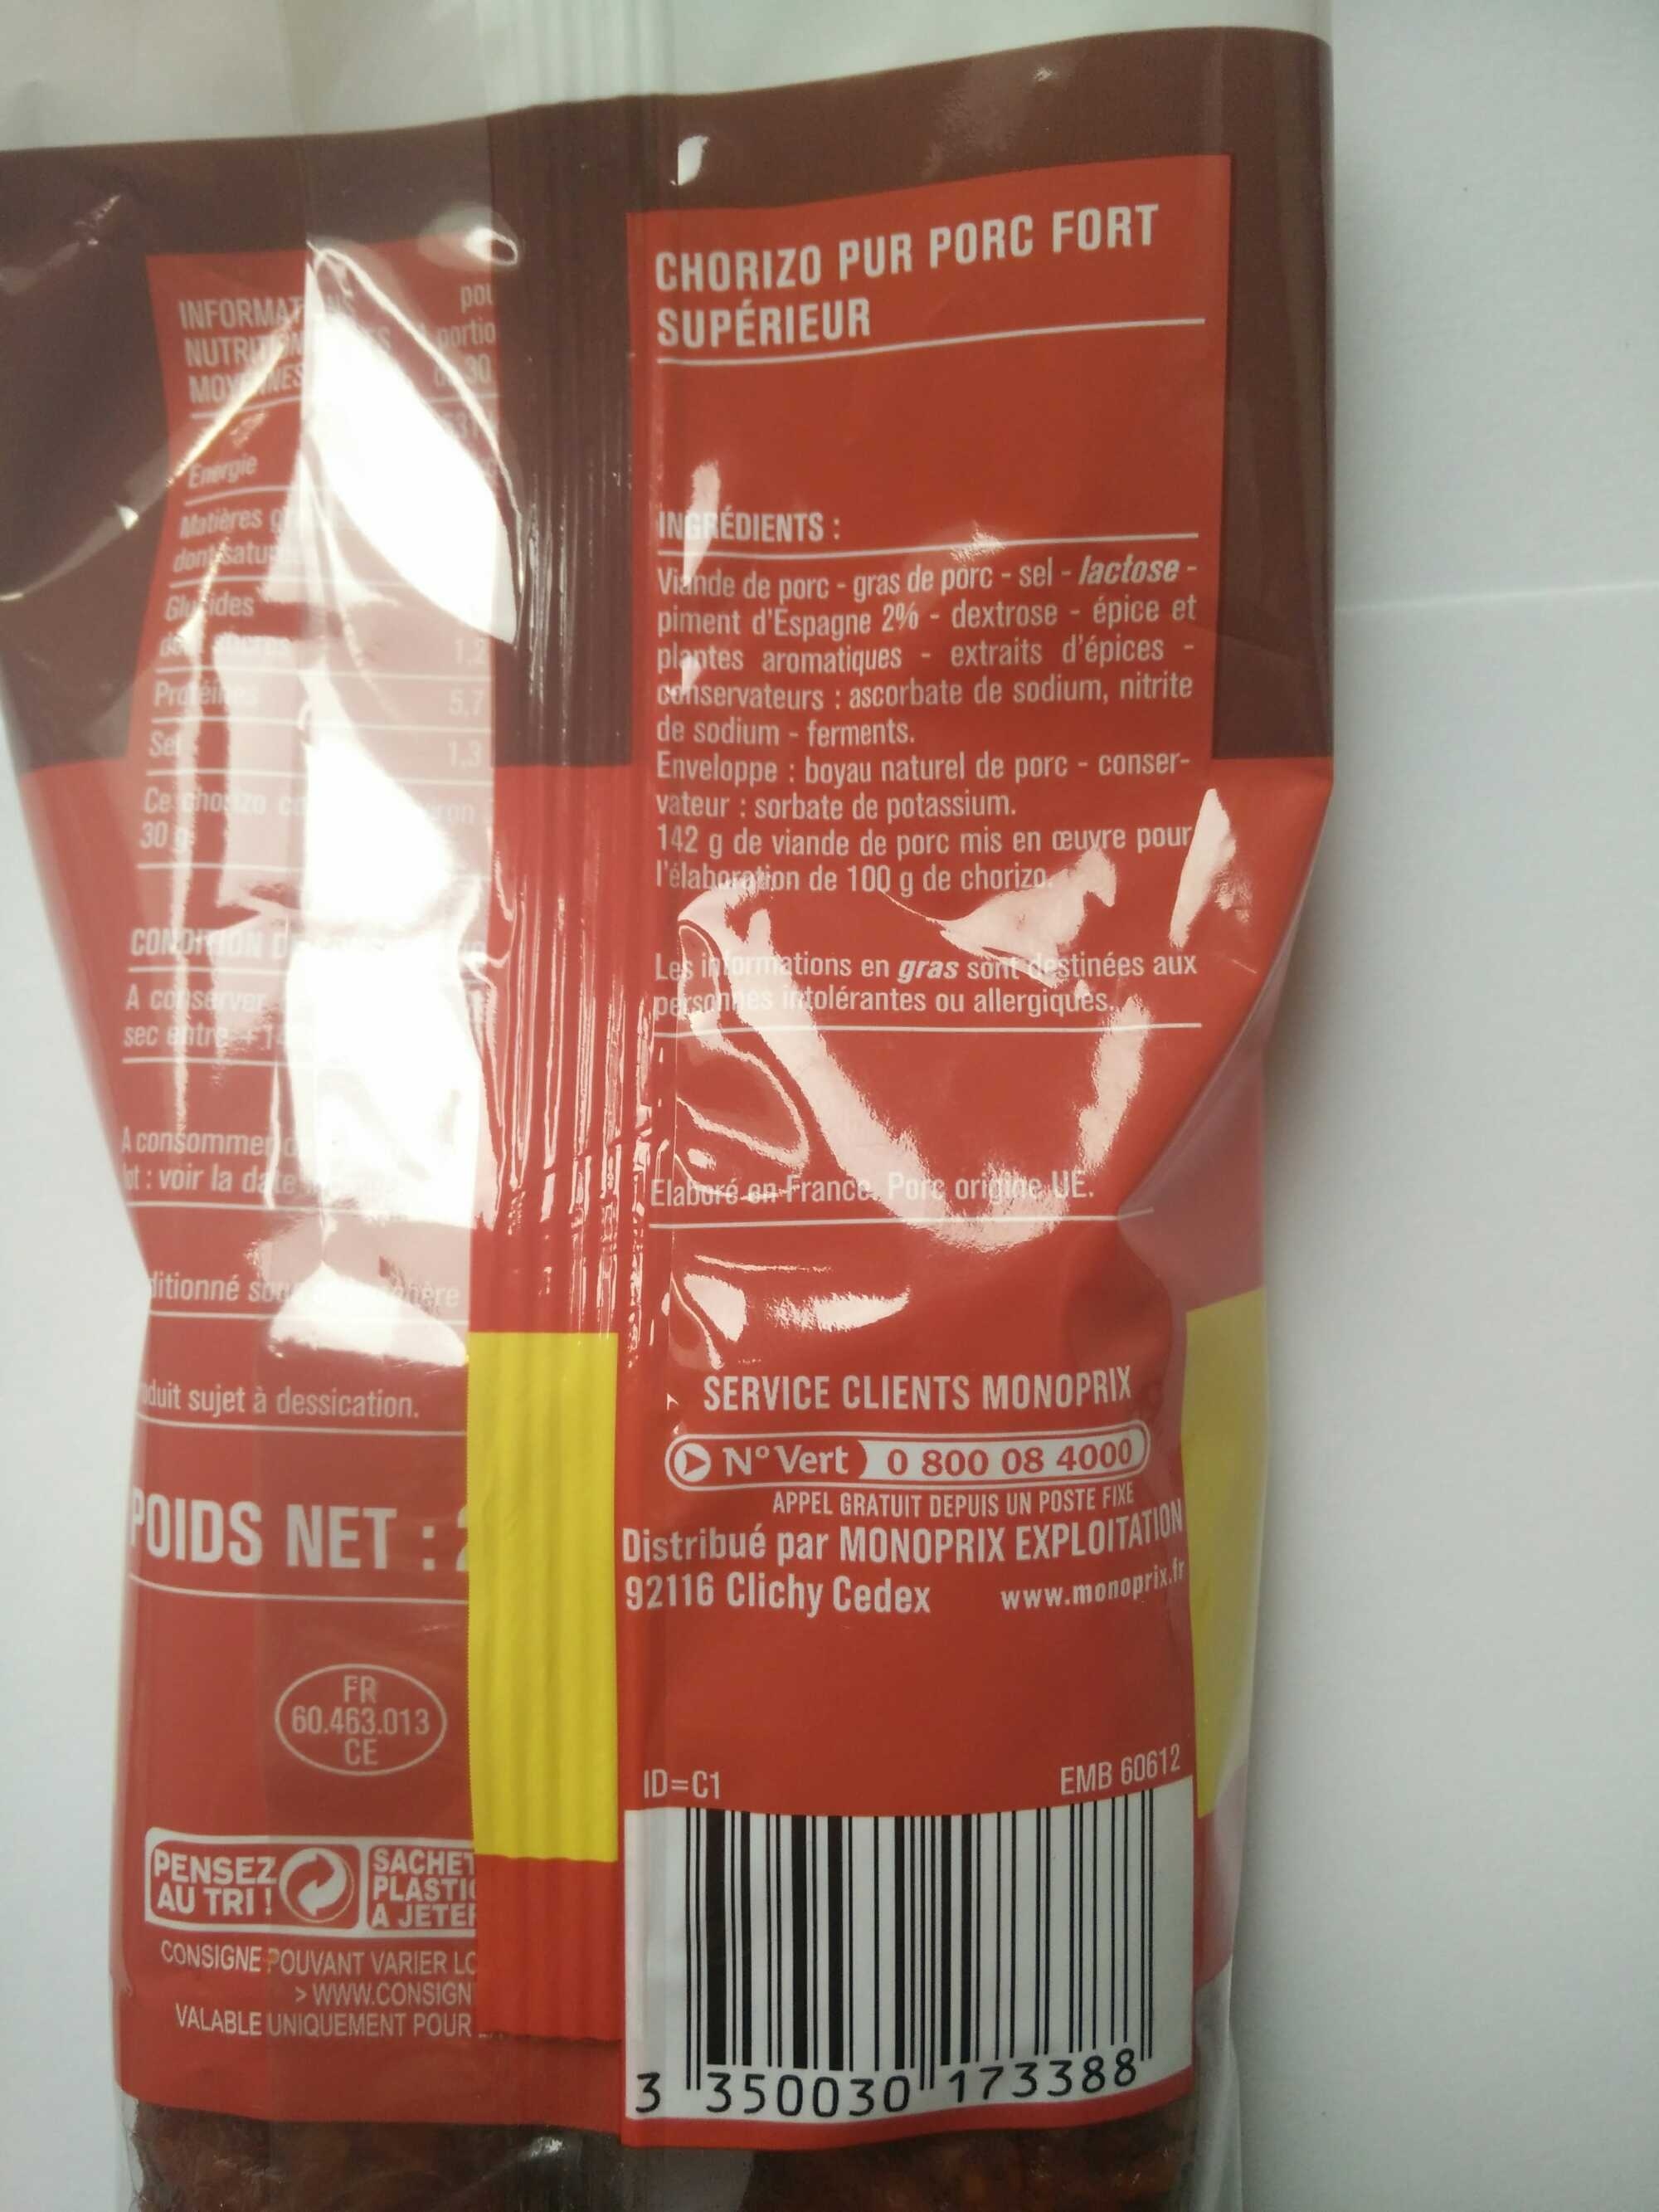 Chorizo fort - Product - en